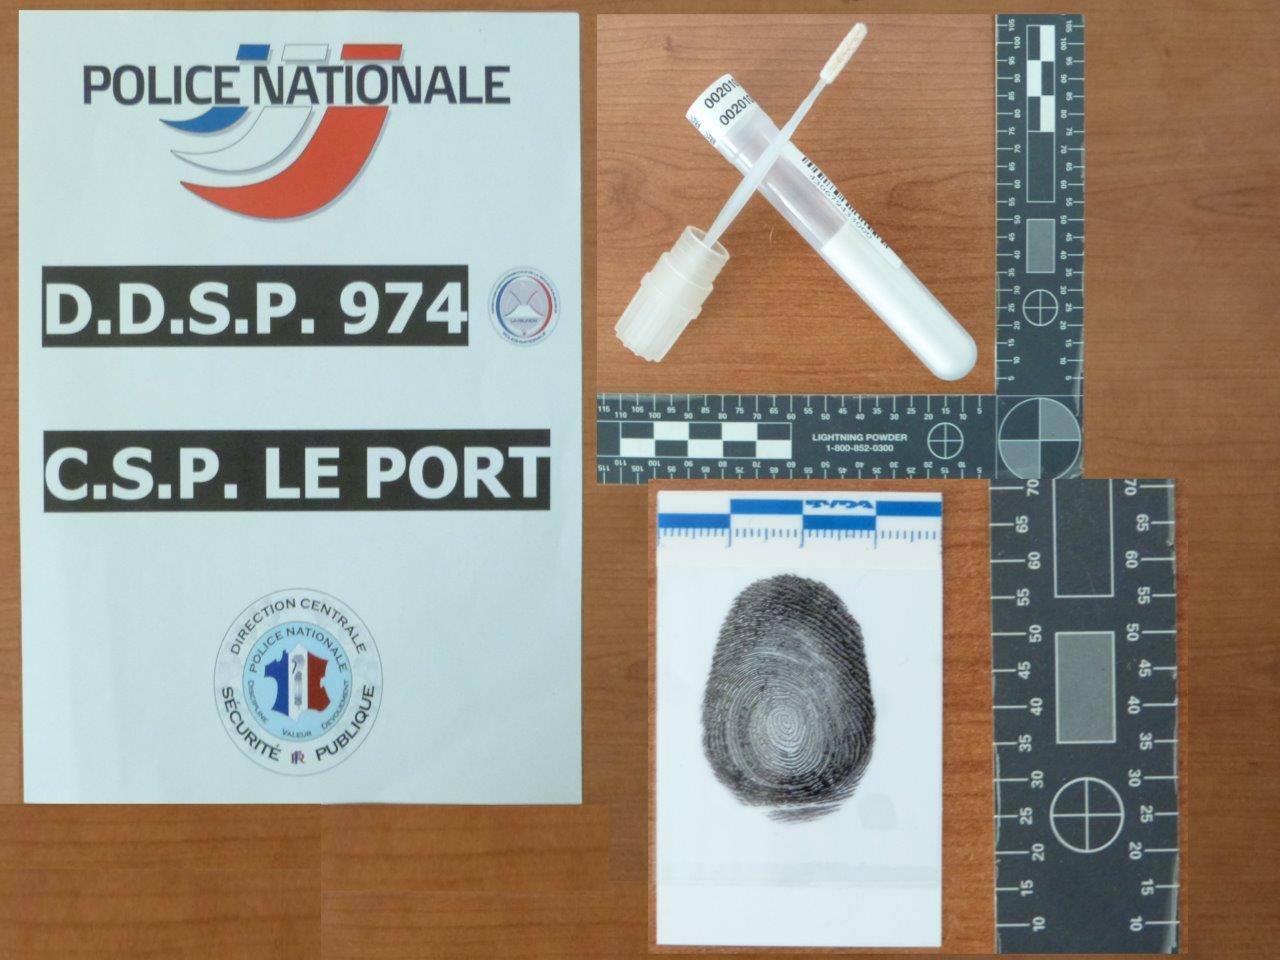 Photos FB Police Nationale de la Réunion